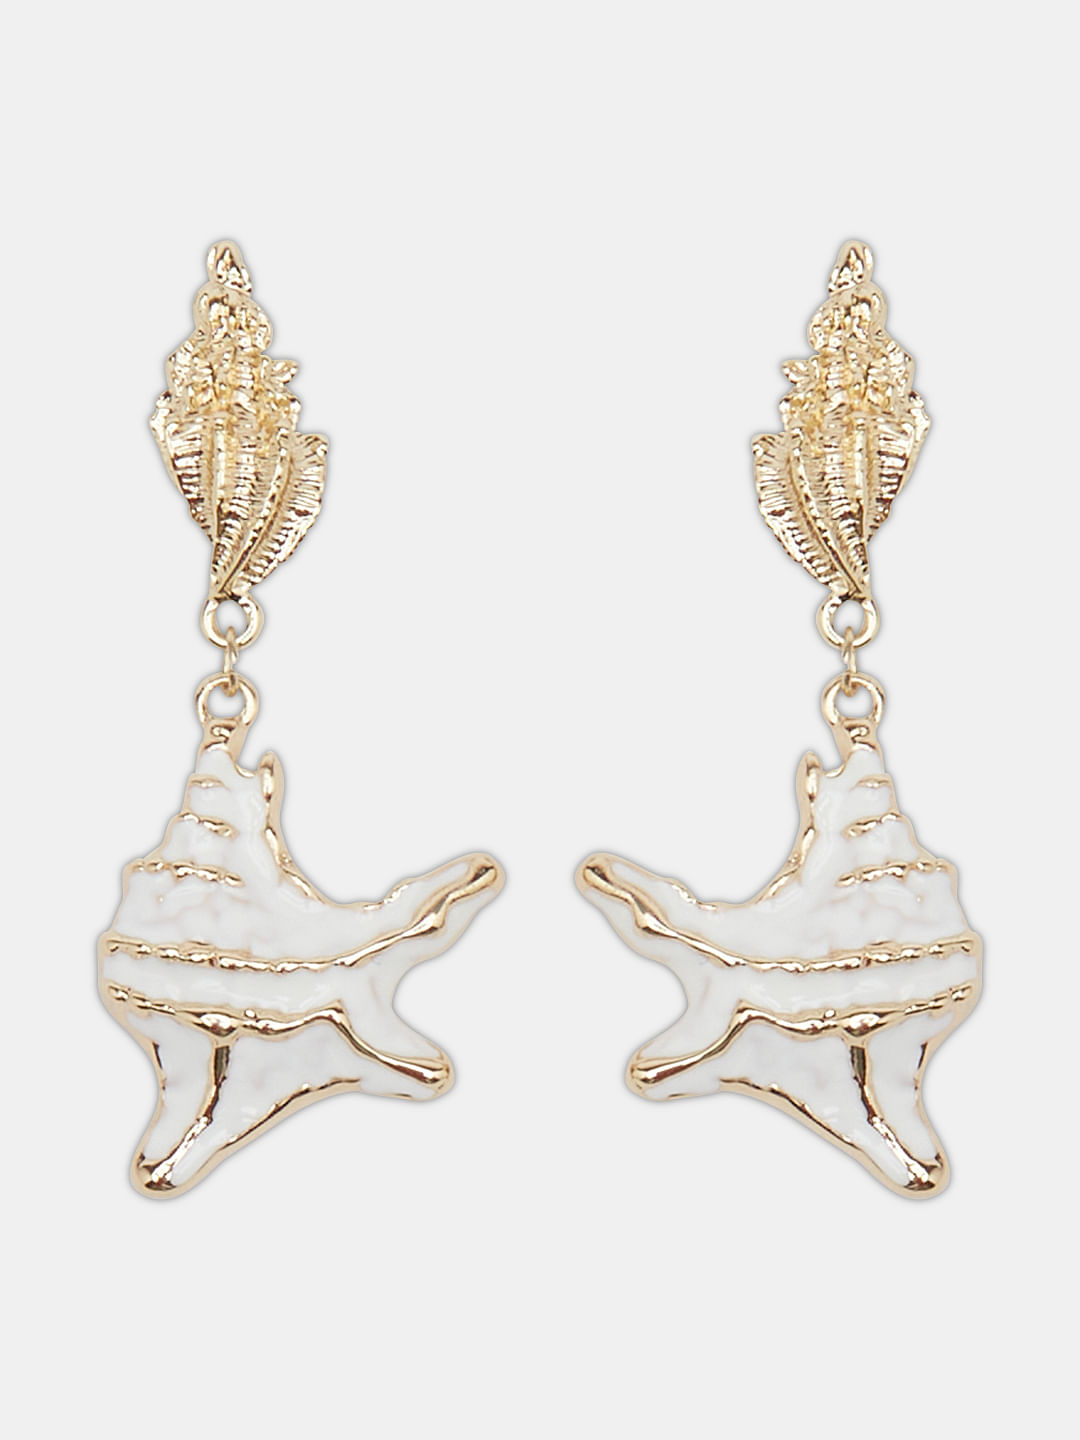 Buy Natural Sea Shell Earrings Conch Shell Earrings Mermaid Online in India   Etsy